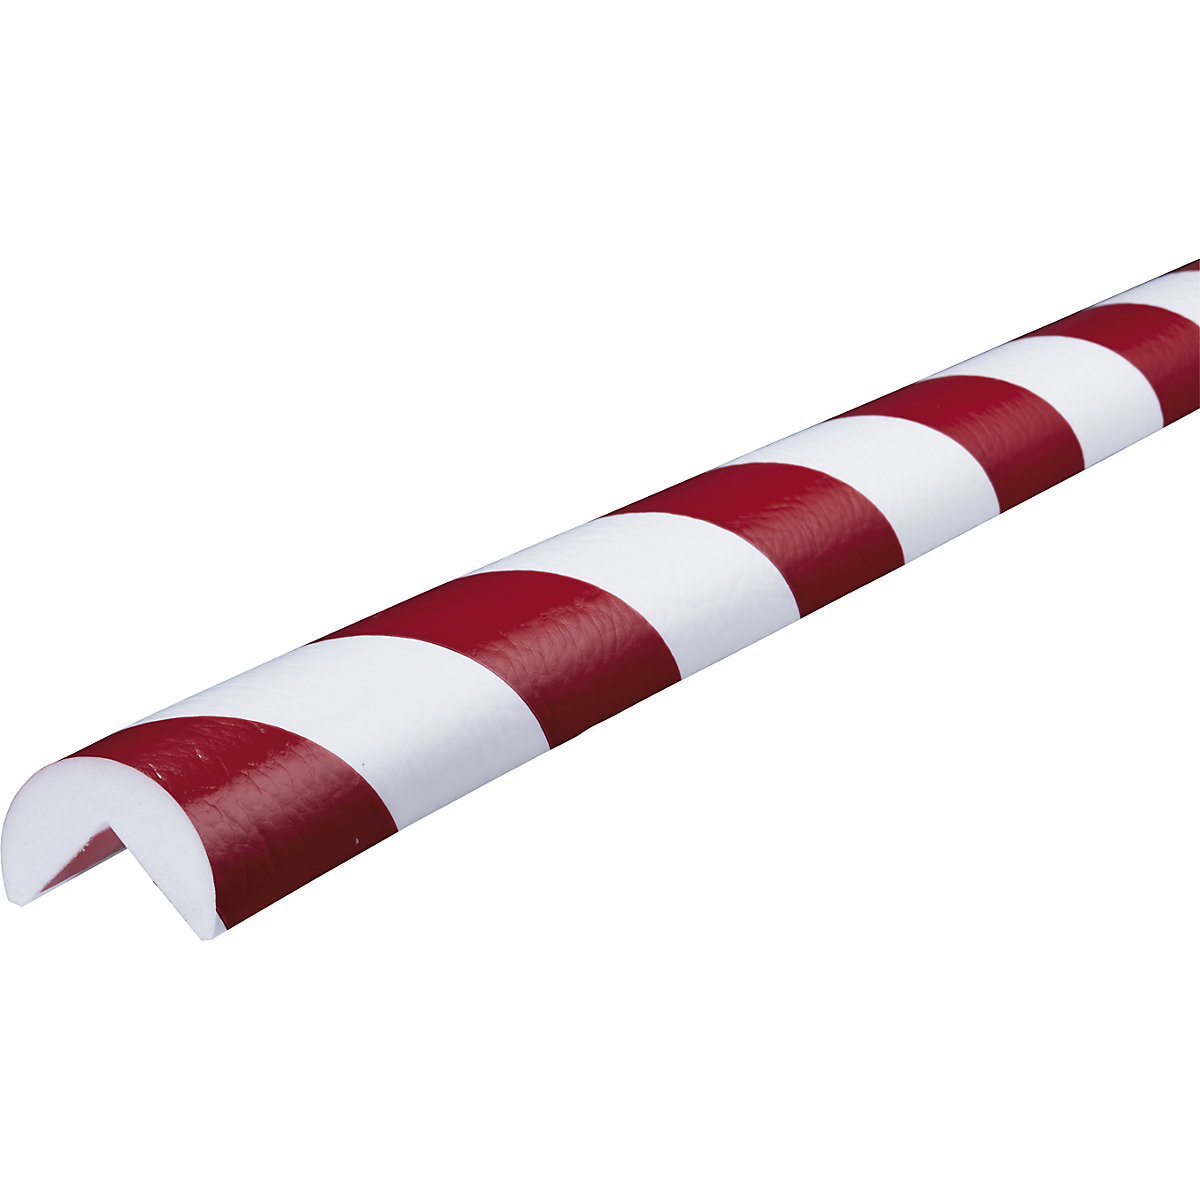 Knuffi®-hoekbescherming – SHG, type A, afmetingen individueel, per str. m, rood/wit-10